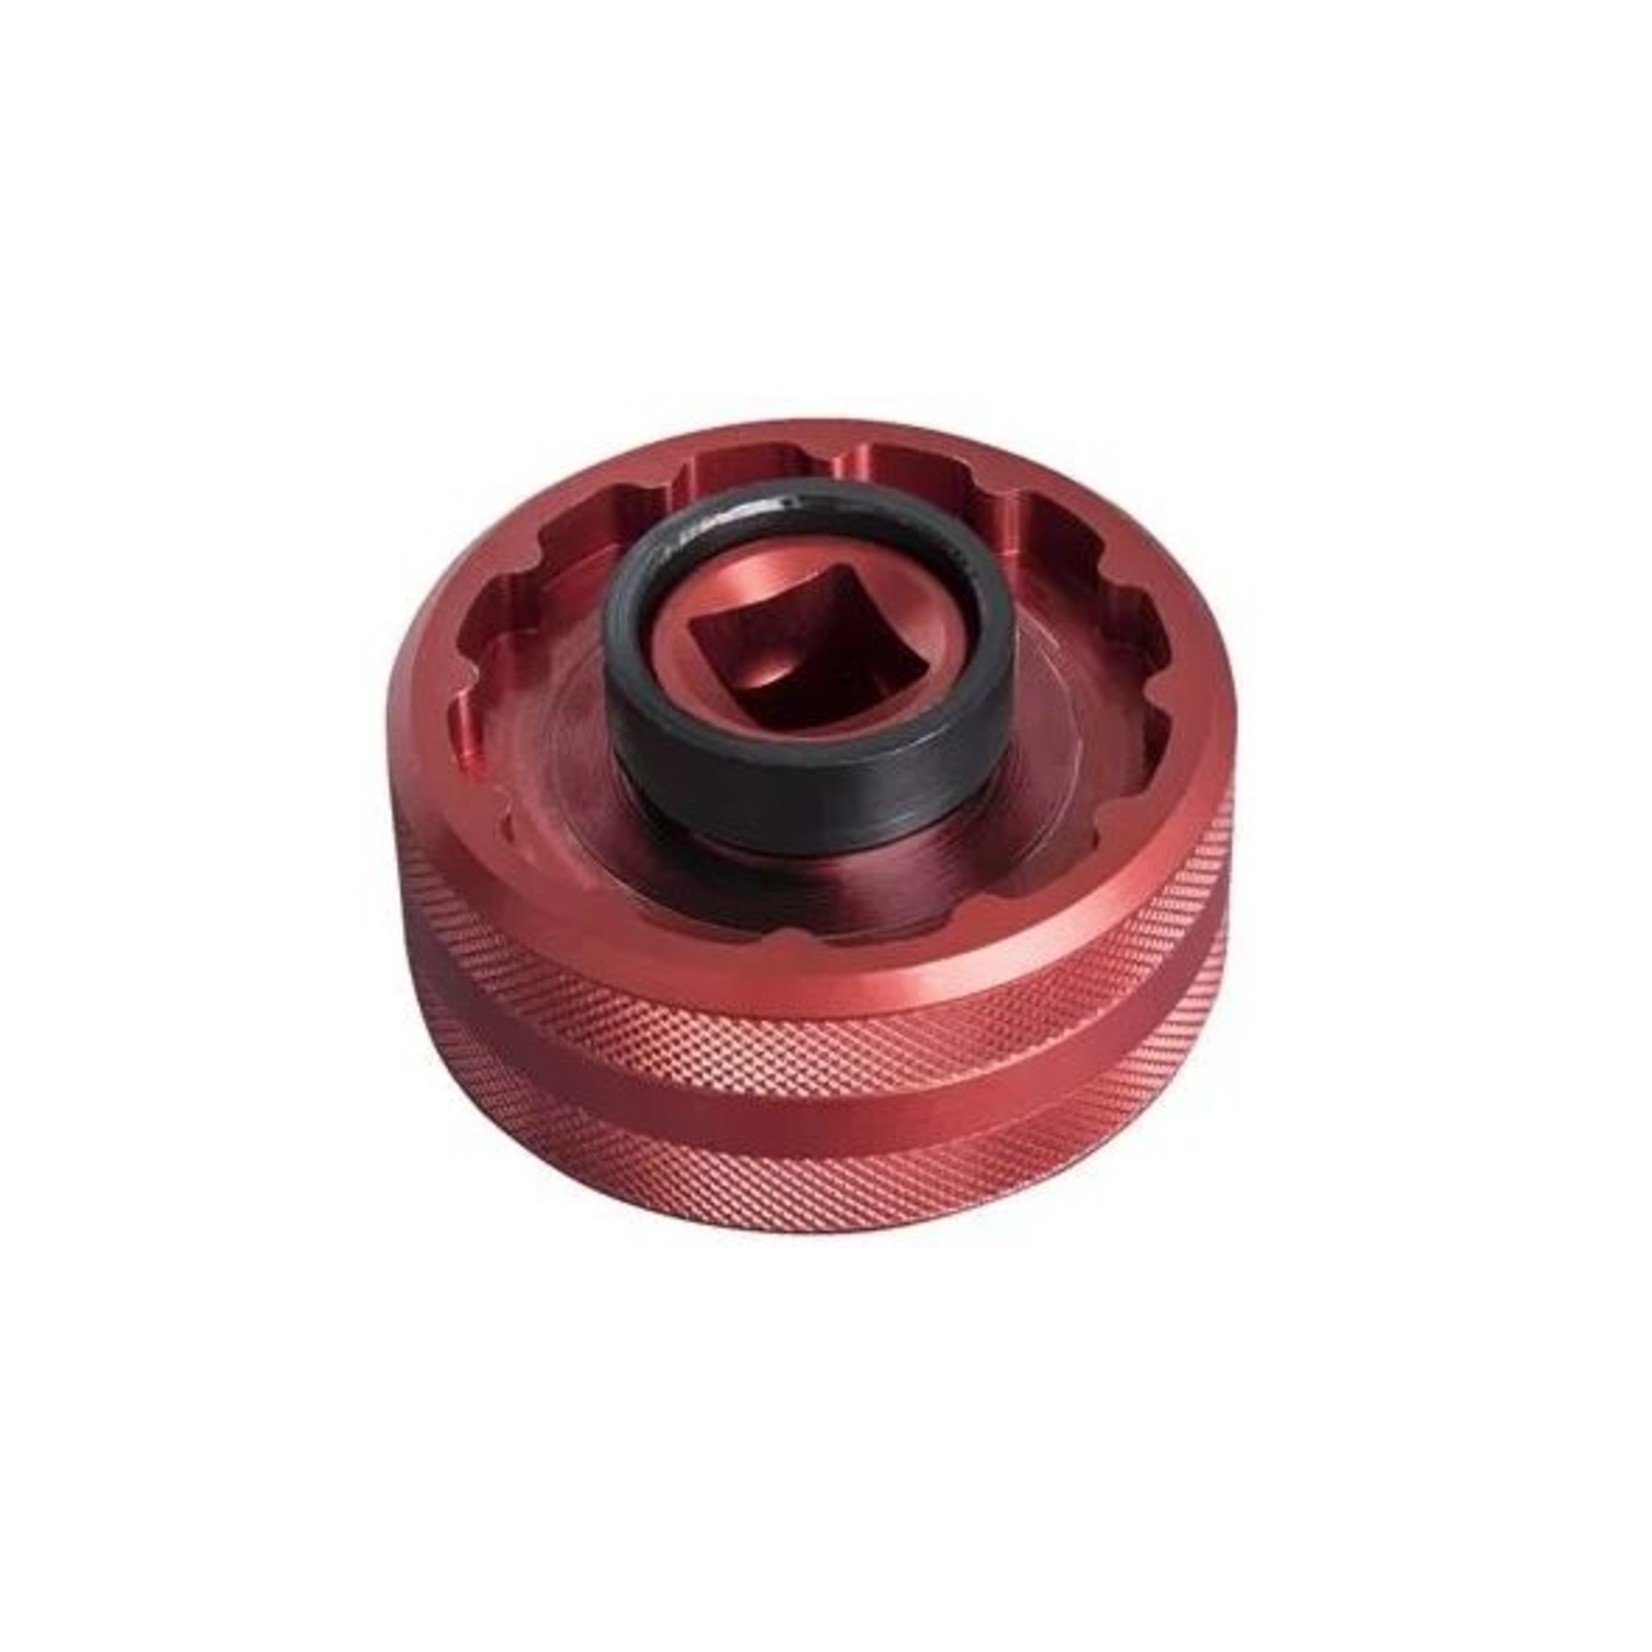 unior Unior Bottom Bracket Socket - T47 Anodized 628495 - Red -U1458